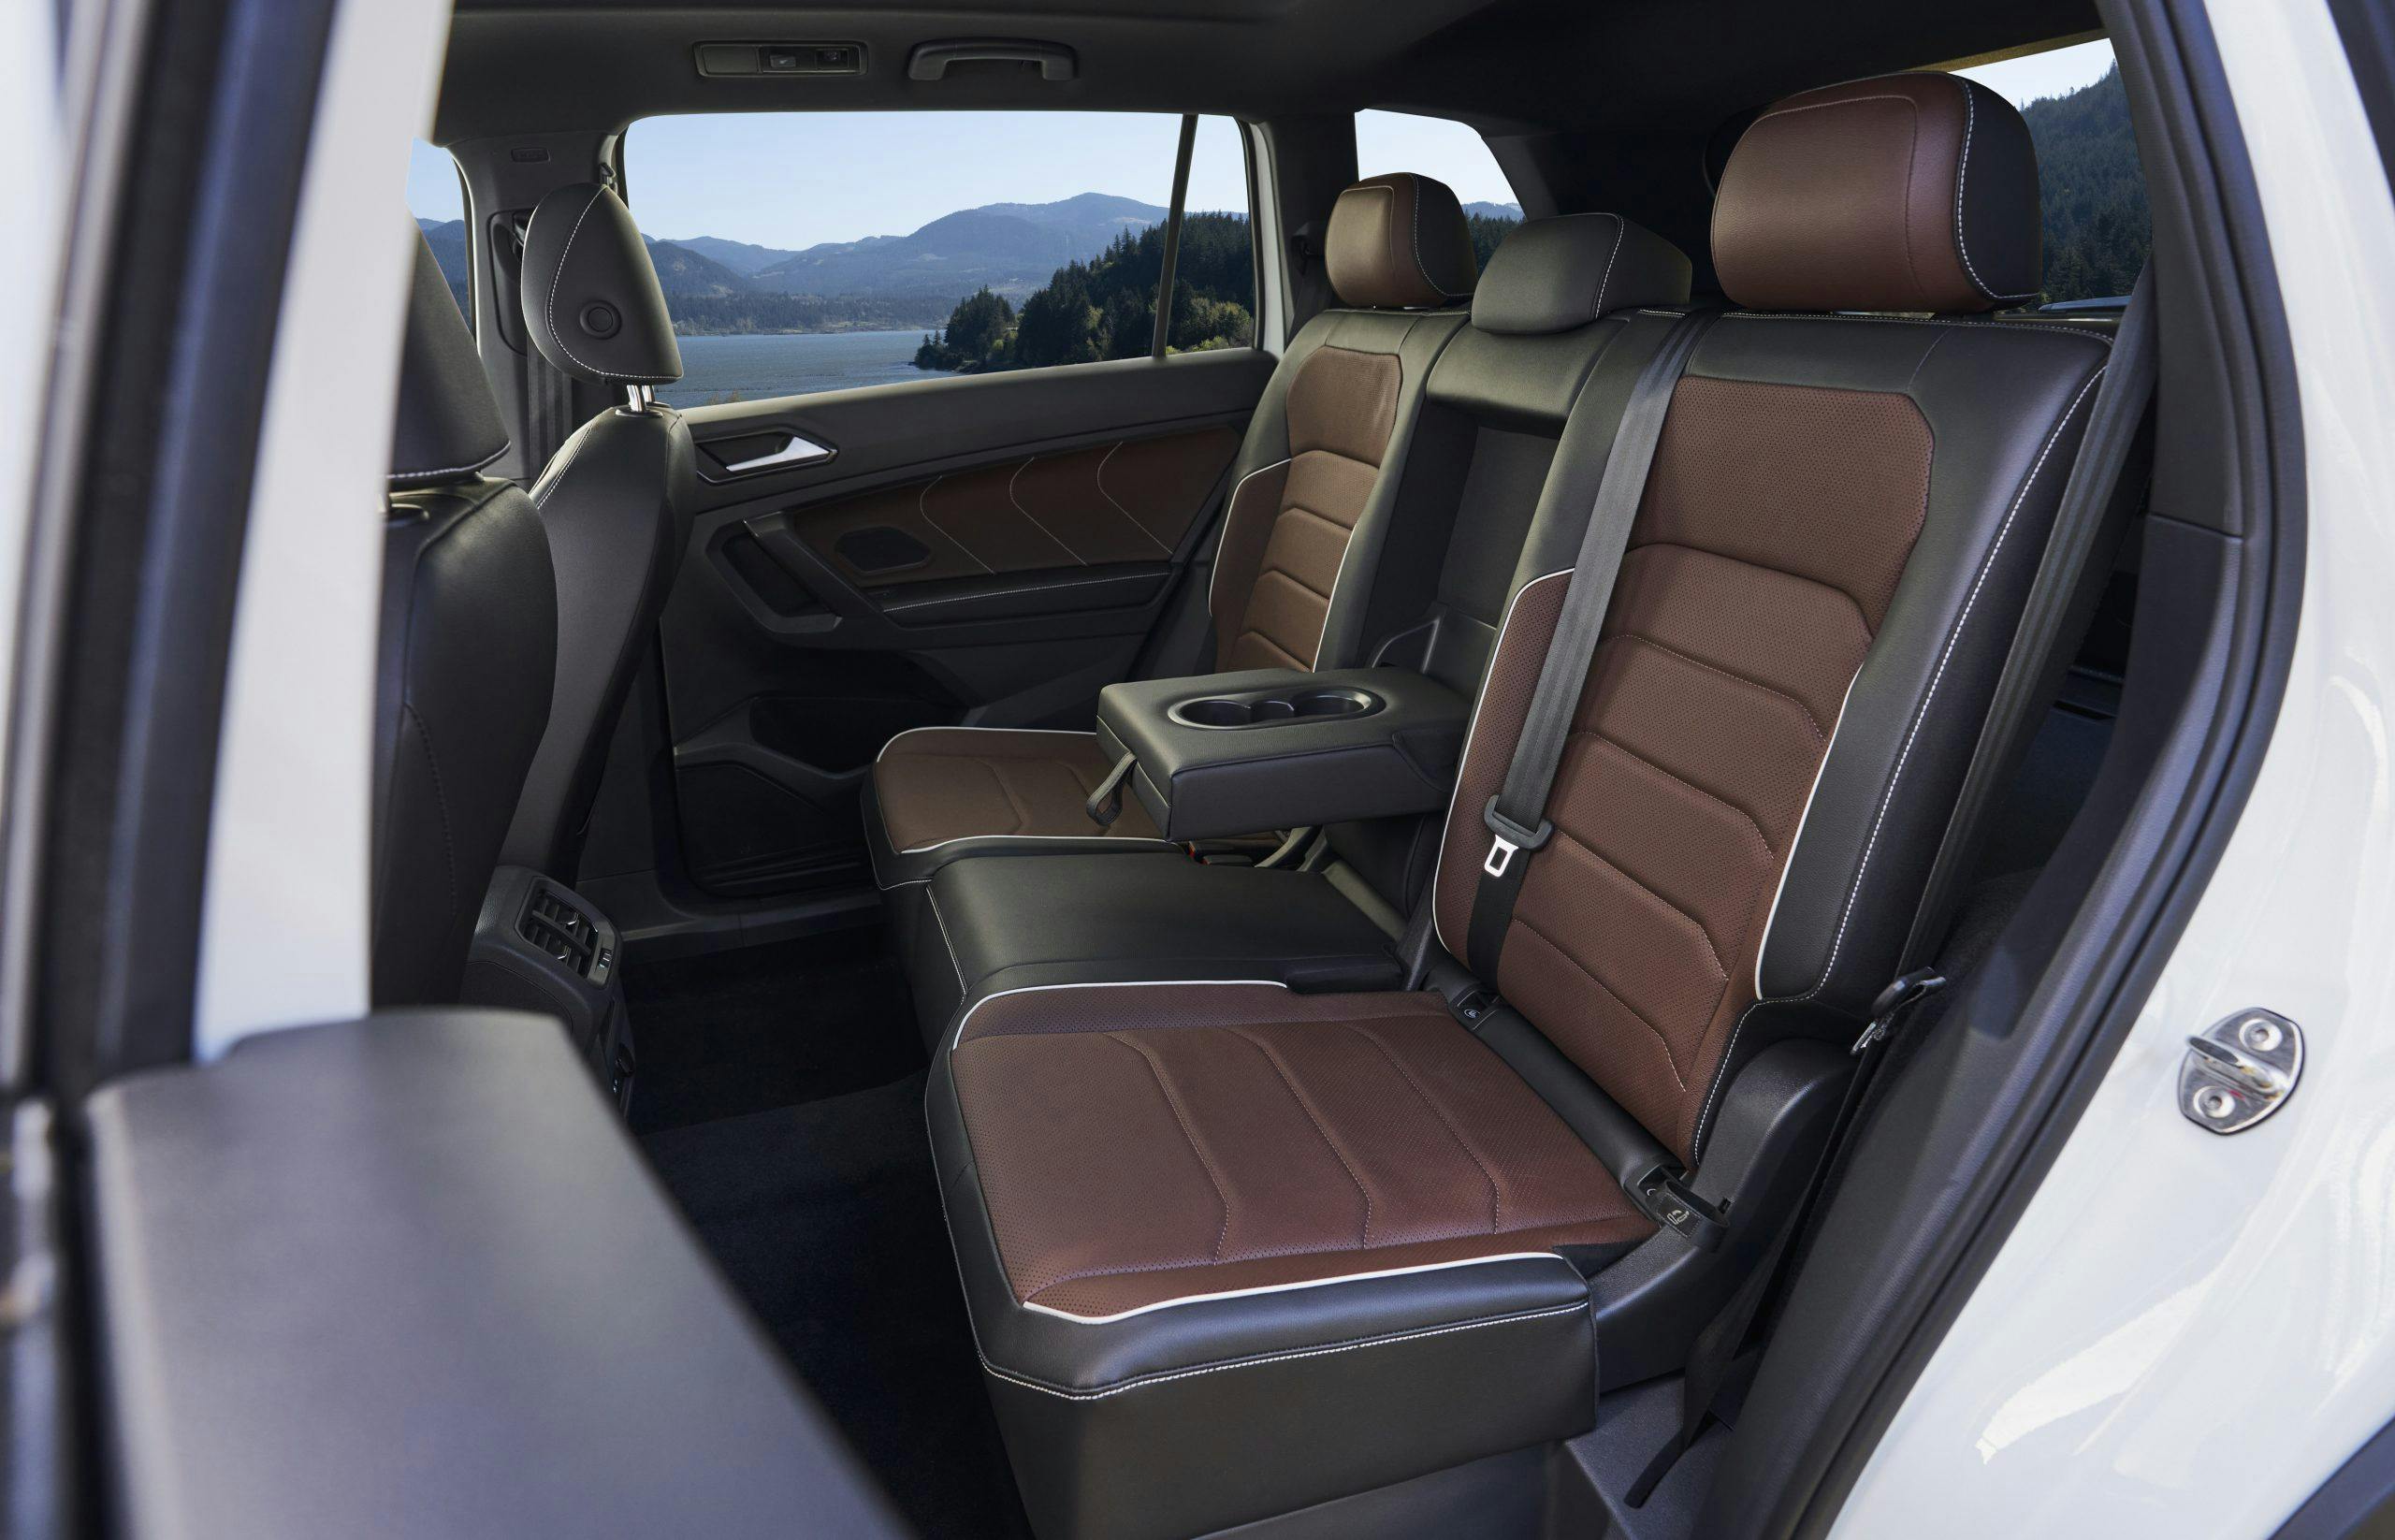 2022 VW Tiguan facelift interior rear seat leather